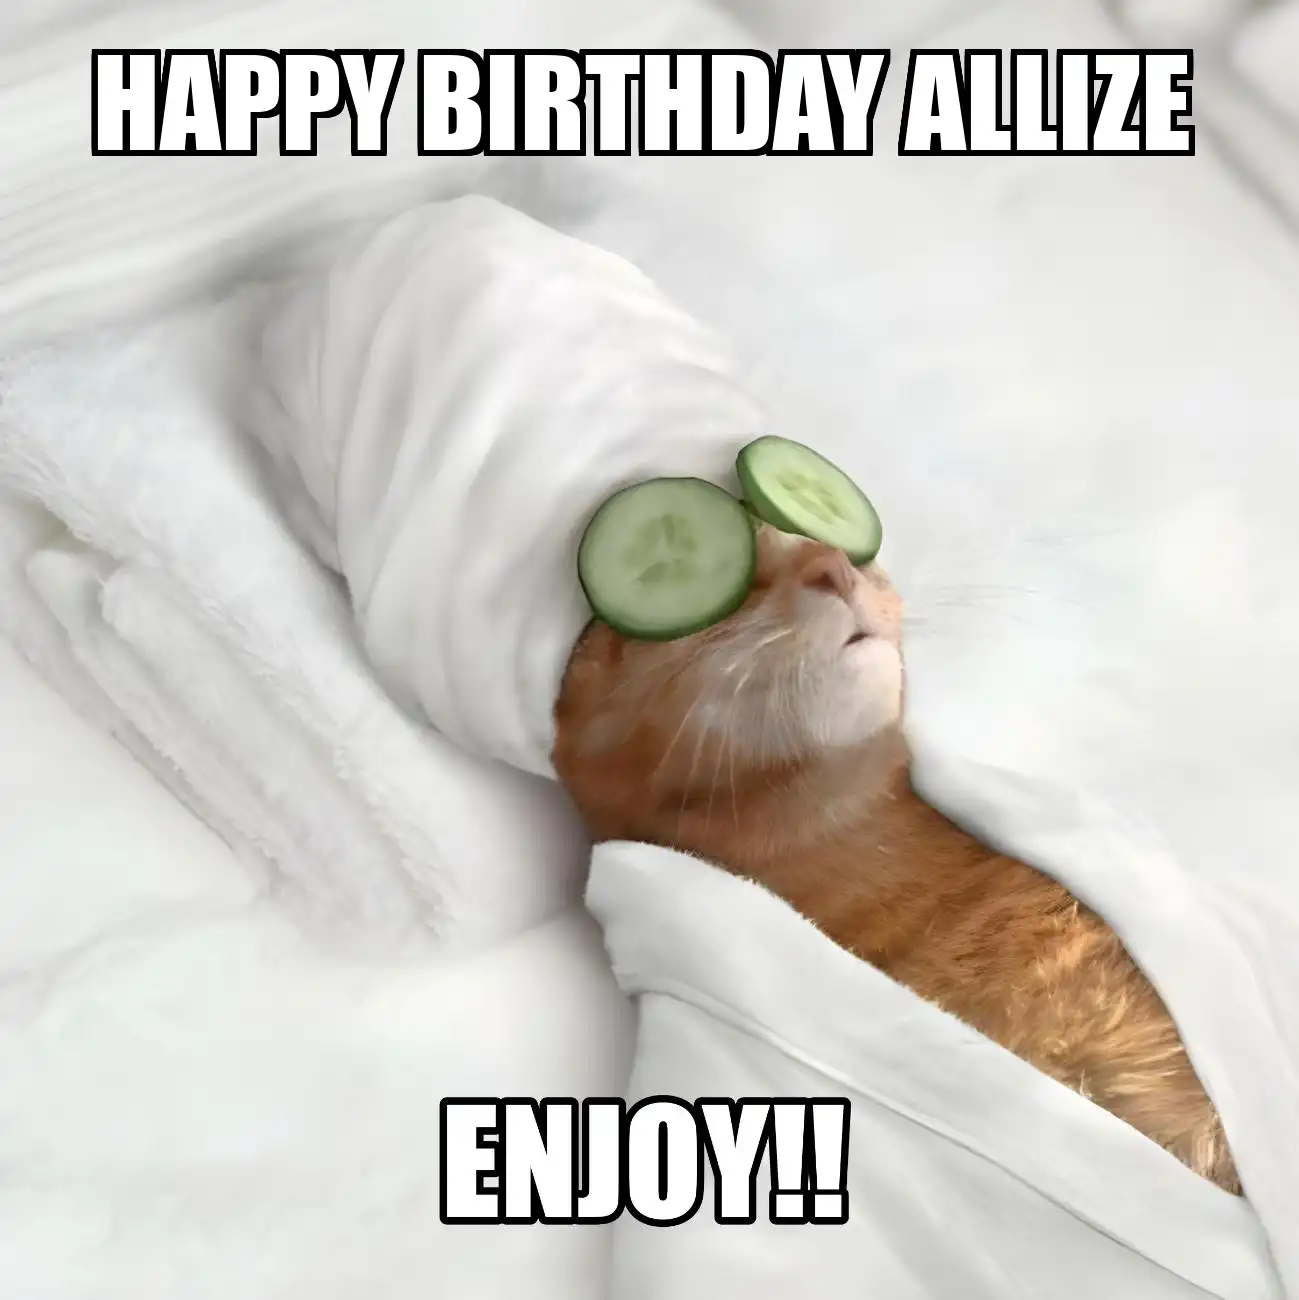 Happy Birthday Allize Enjoy Cat Meme